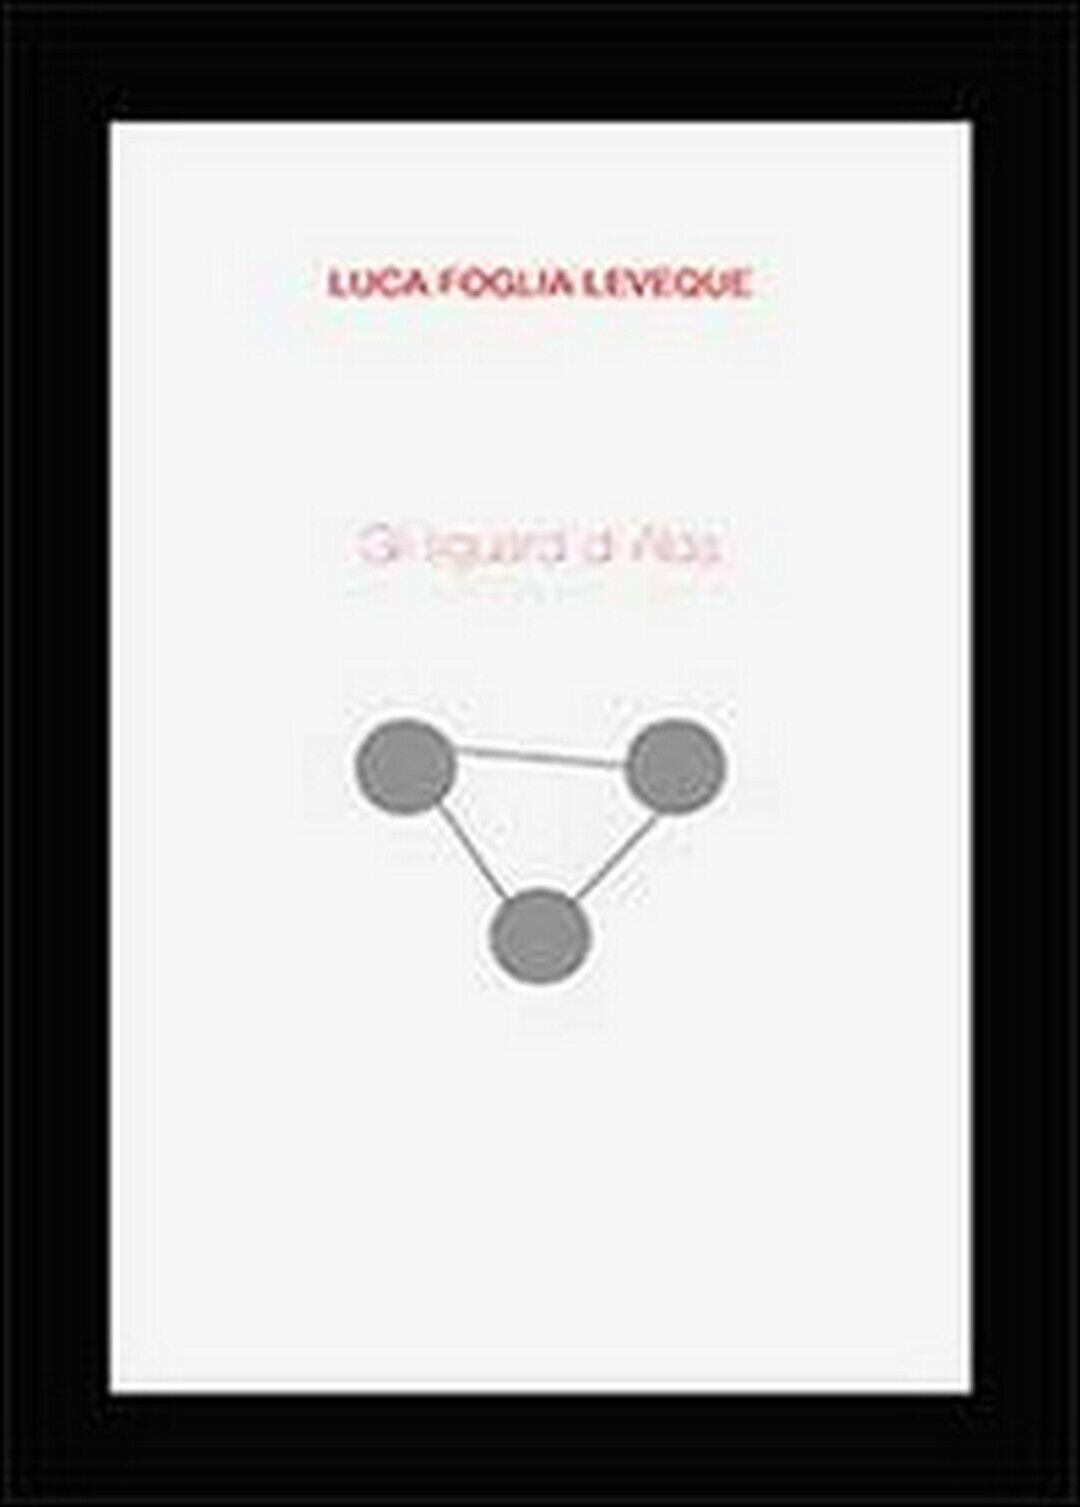 Gli sguardi di Alda  di Luca Foglia Leveque,  2013,  Youcanprint